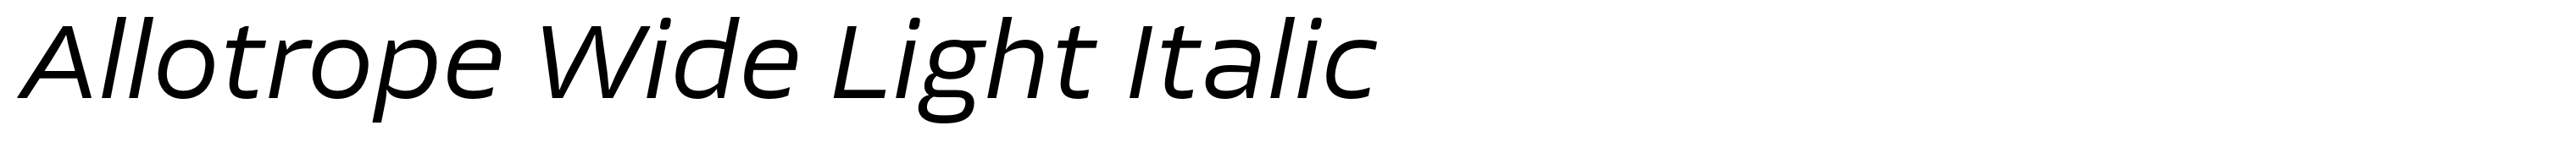 Allotrope Wide Light Italic